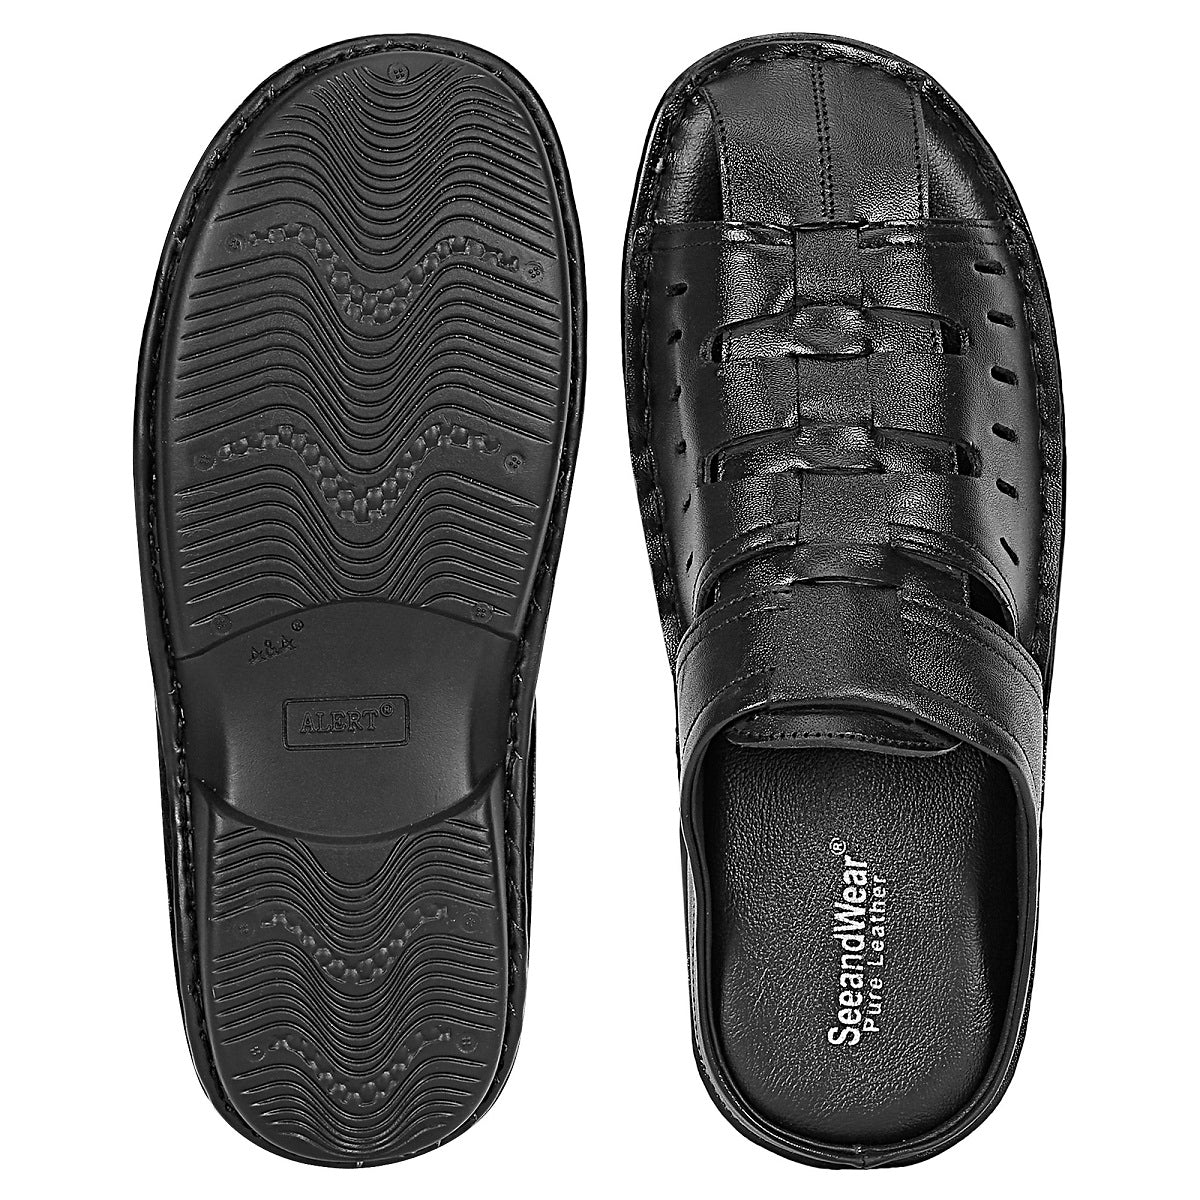 SeeandWear Men Leather Black Sandal